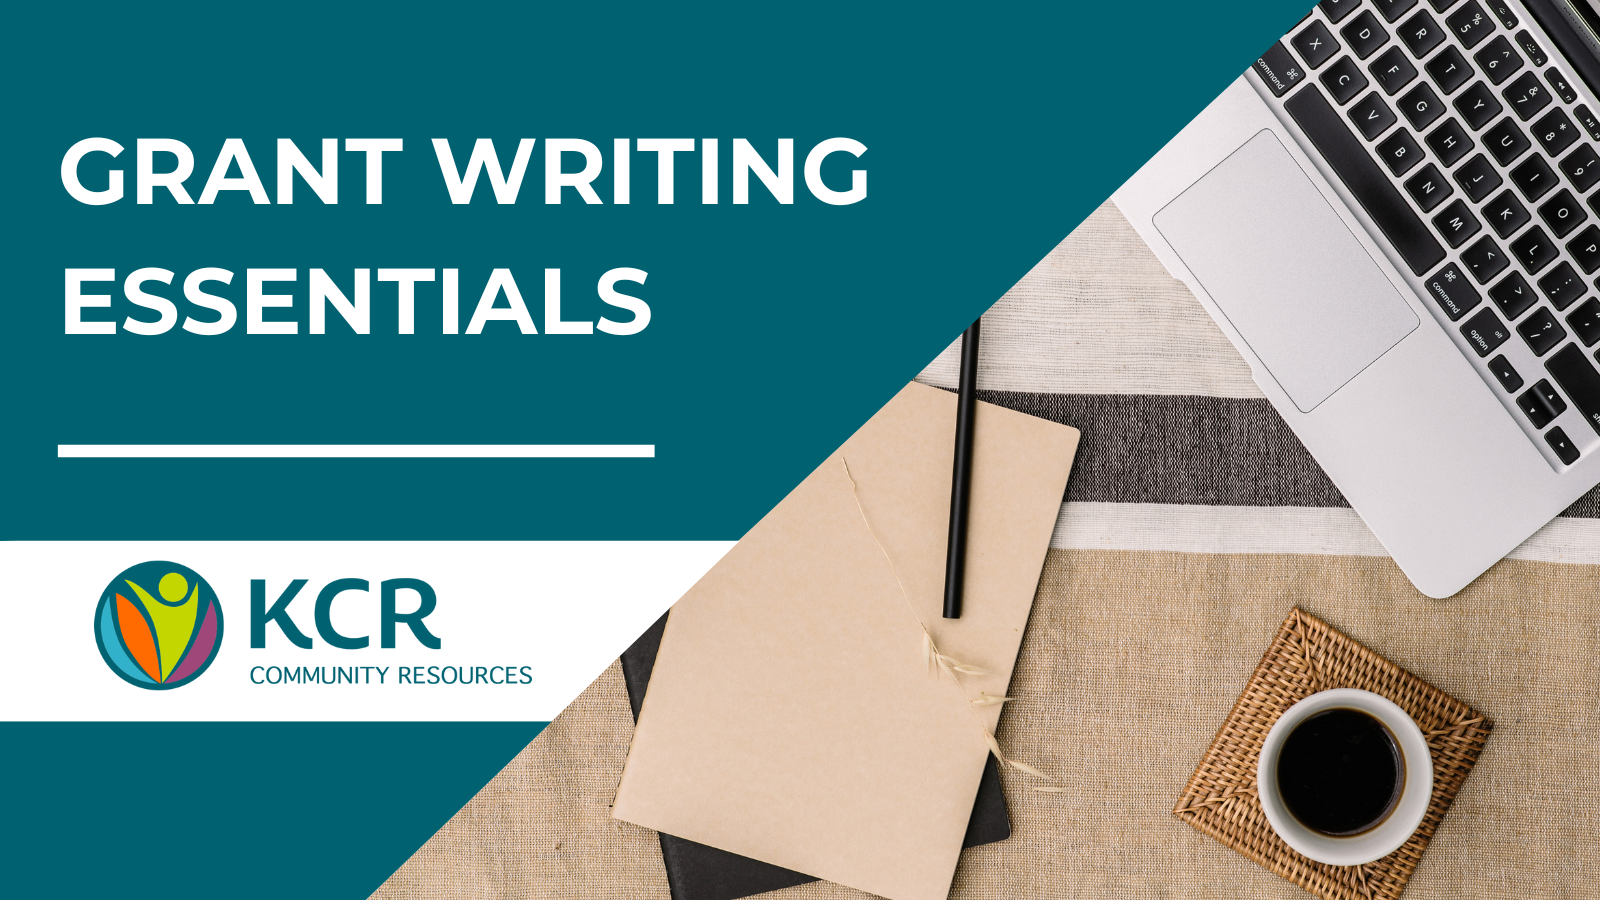 KCR Community Resources - Grant Writing Essentials